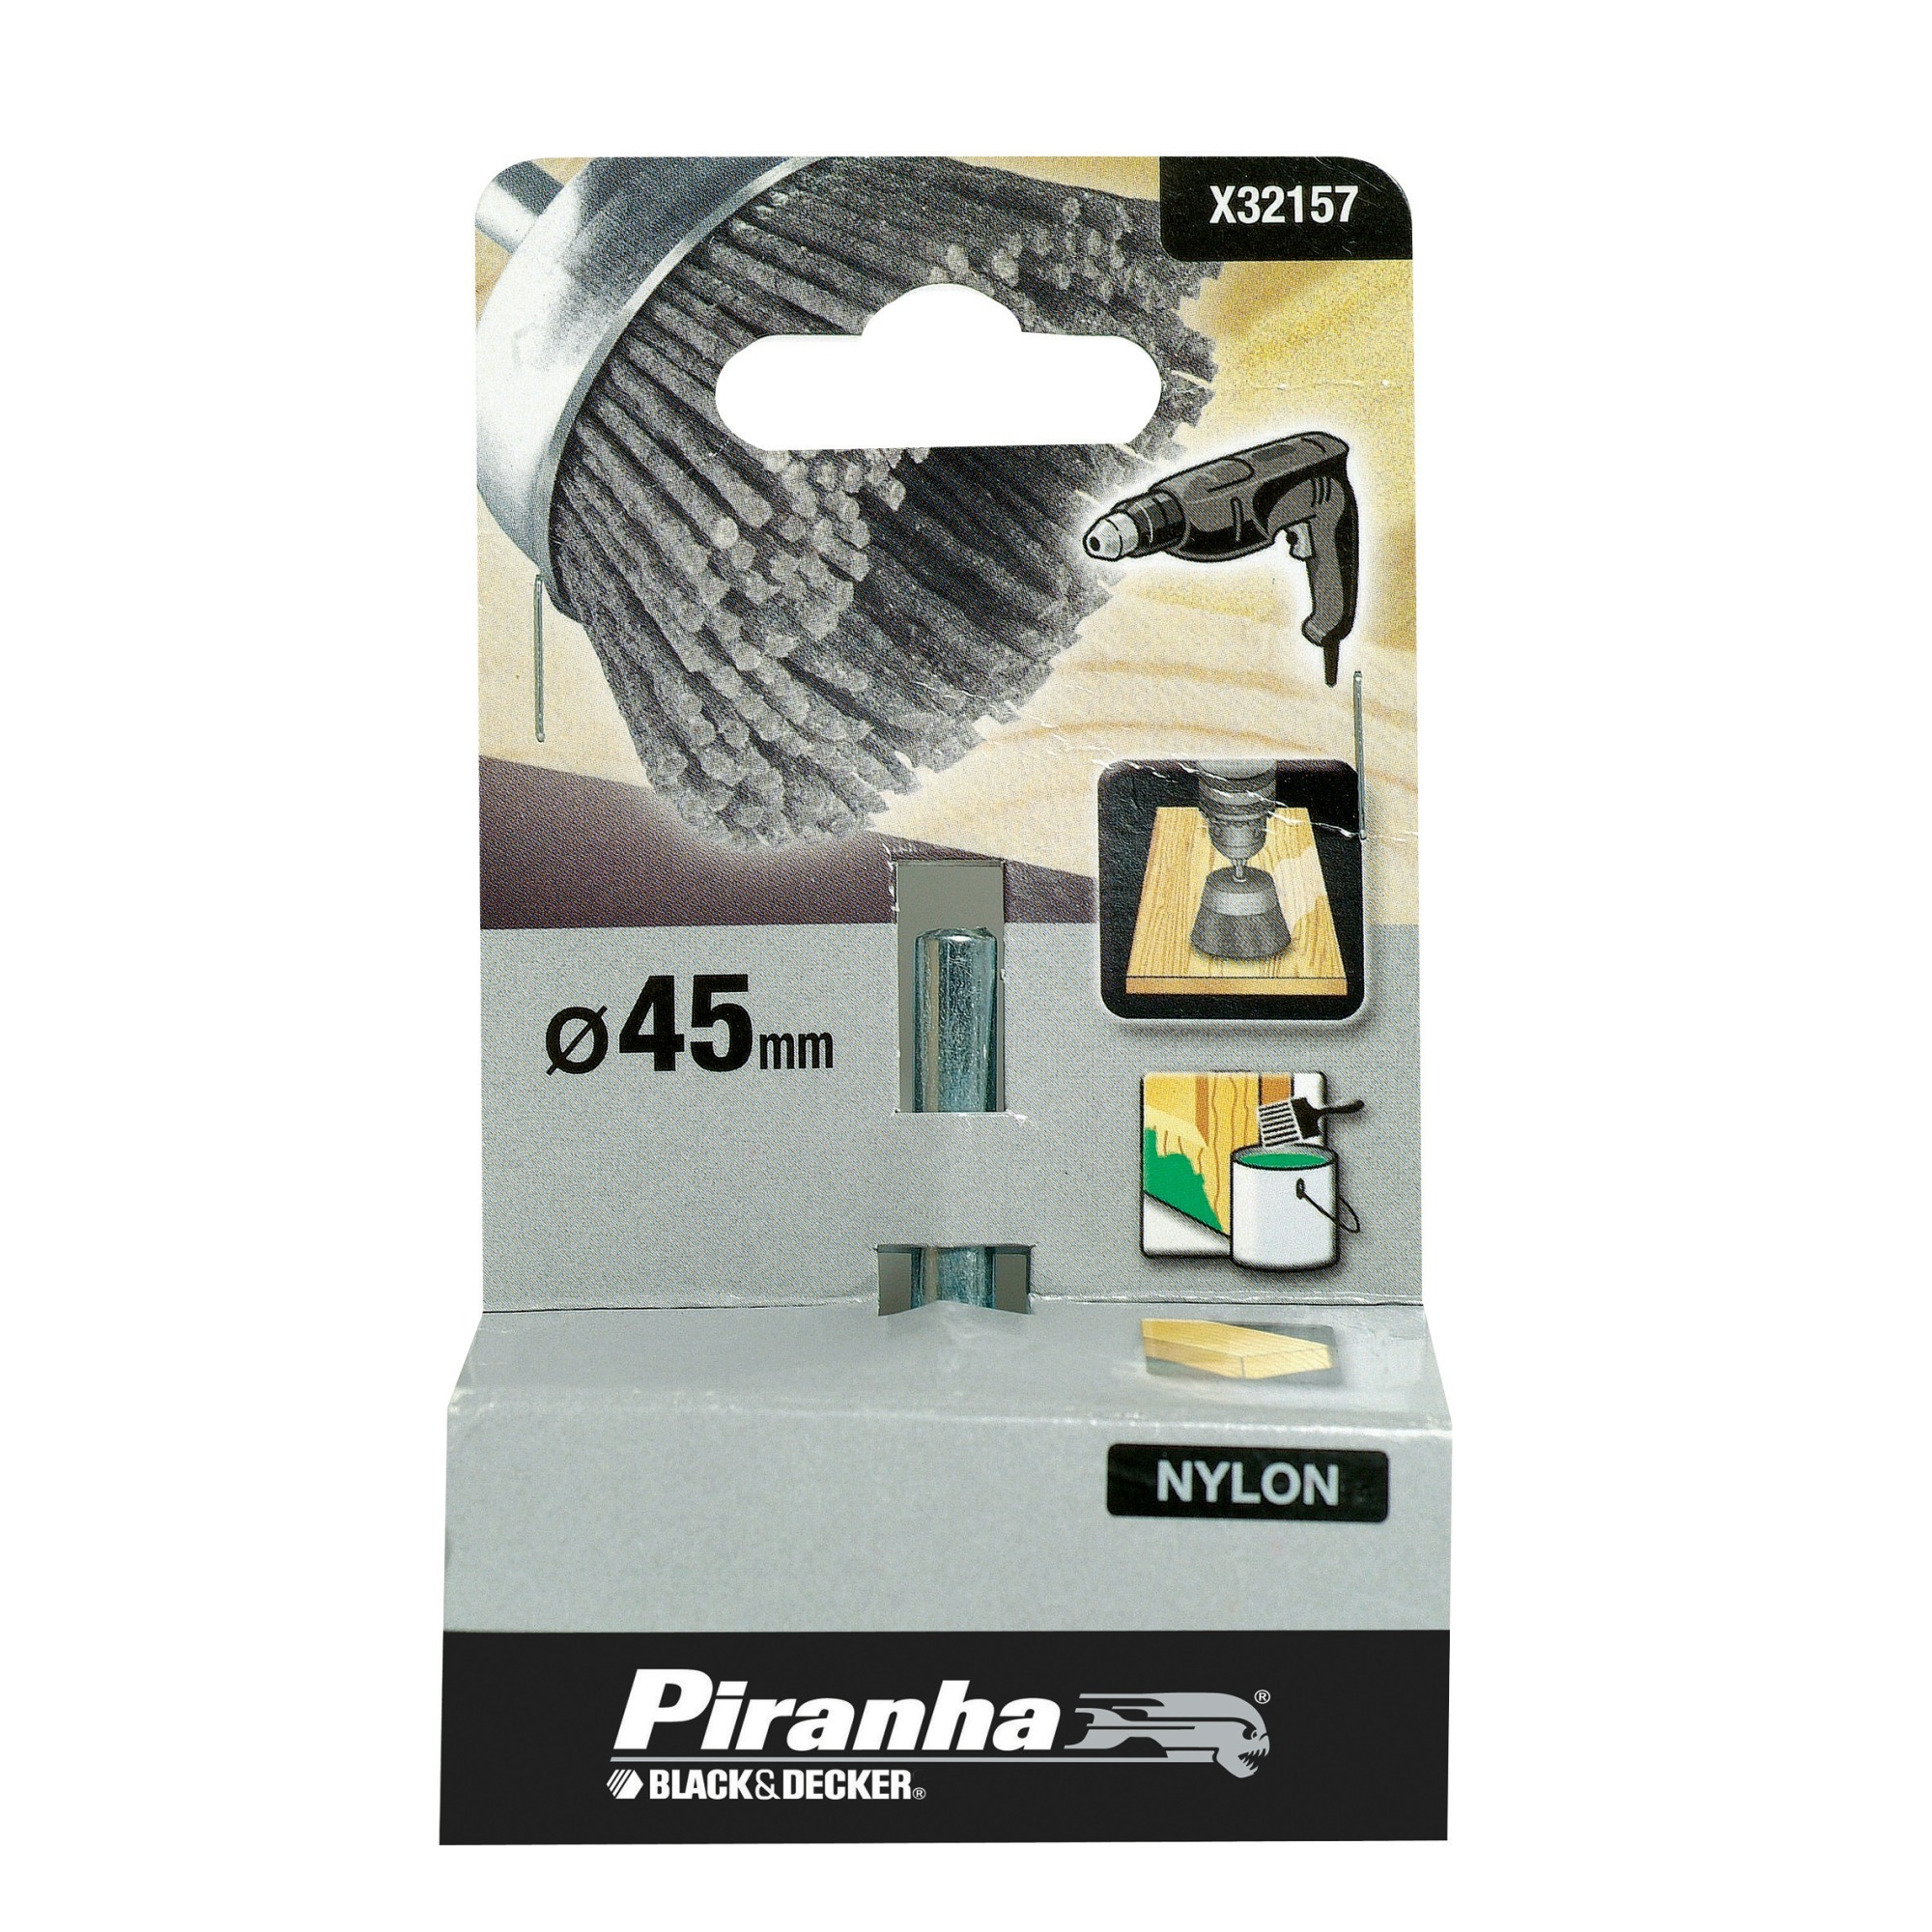 Piranha HI-TECH nylondraadborstel 45 mm X32157